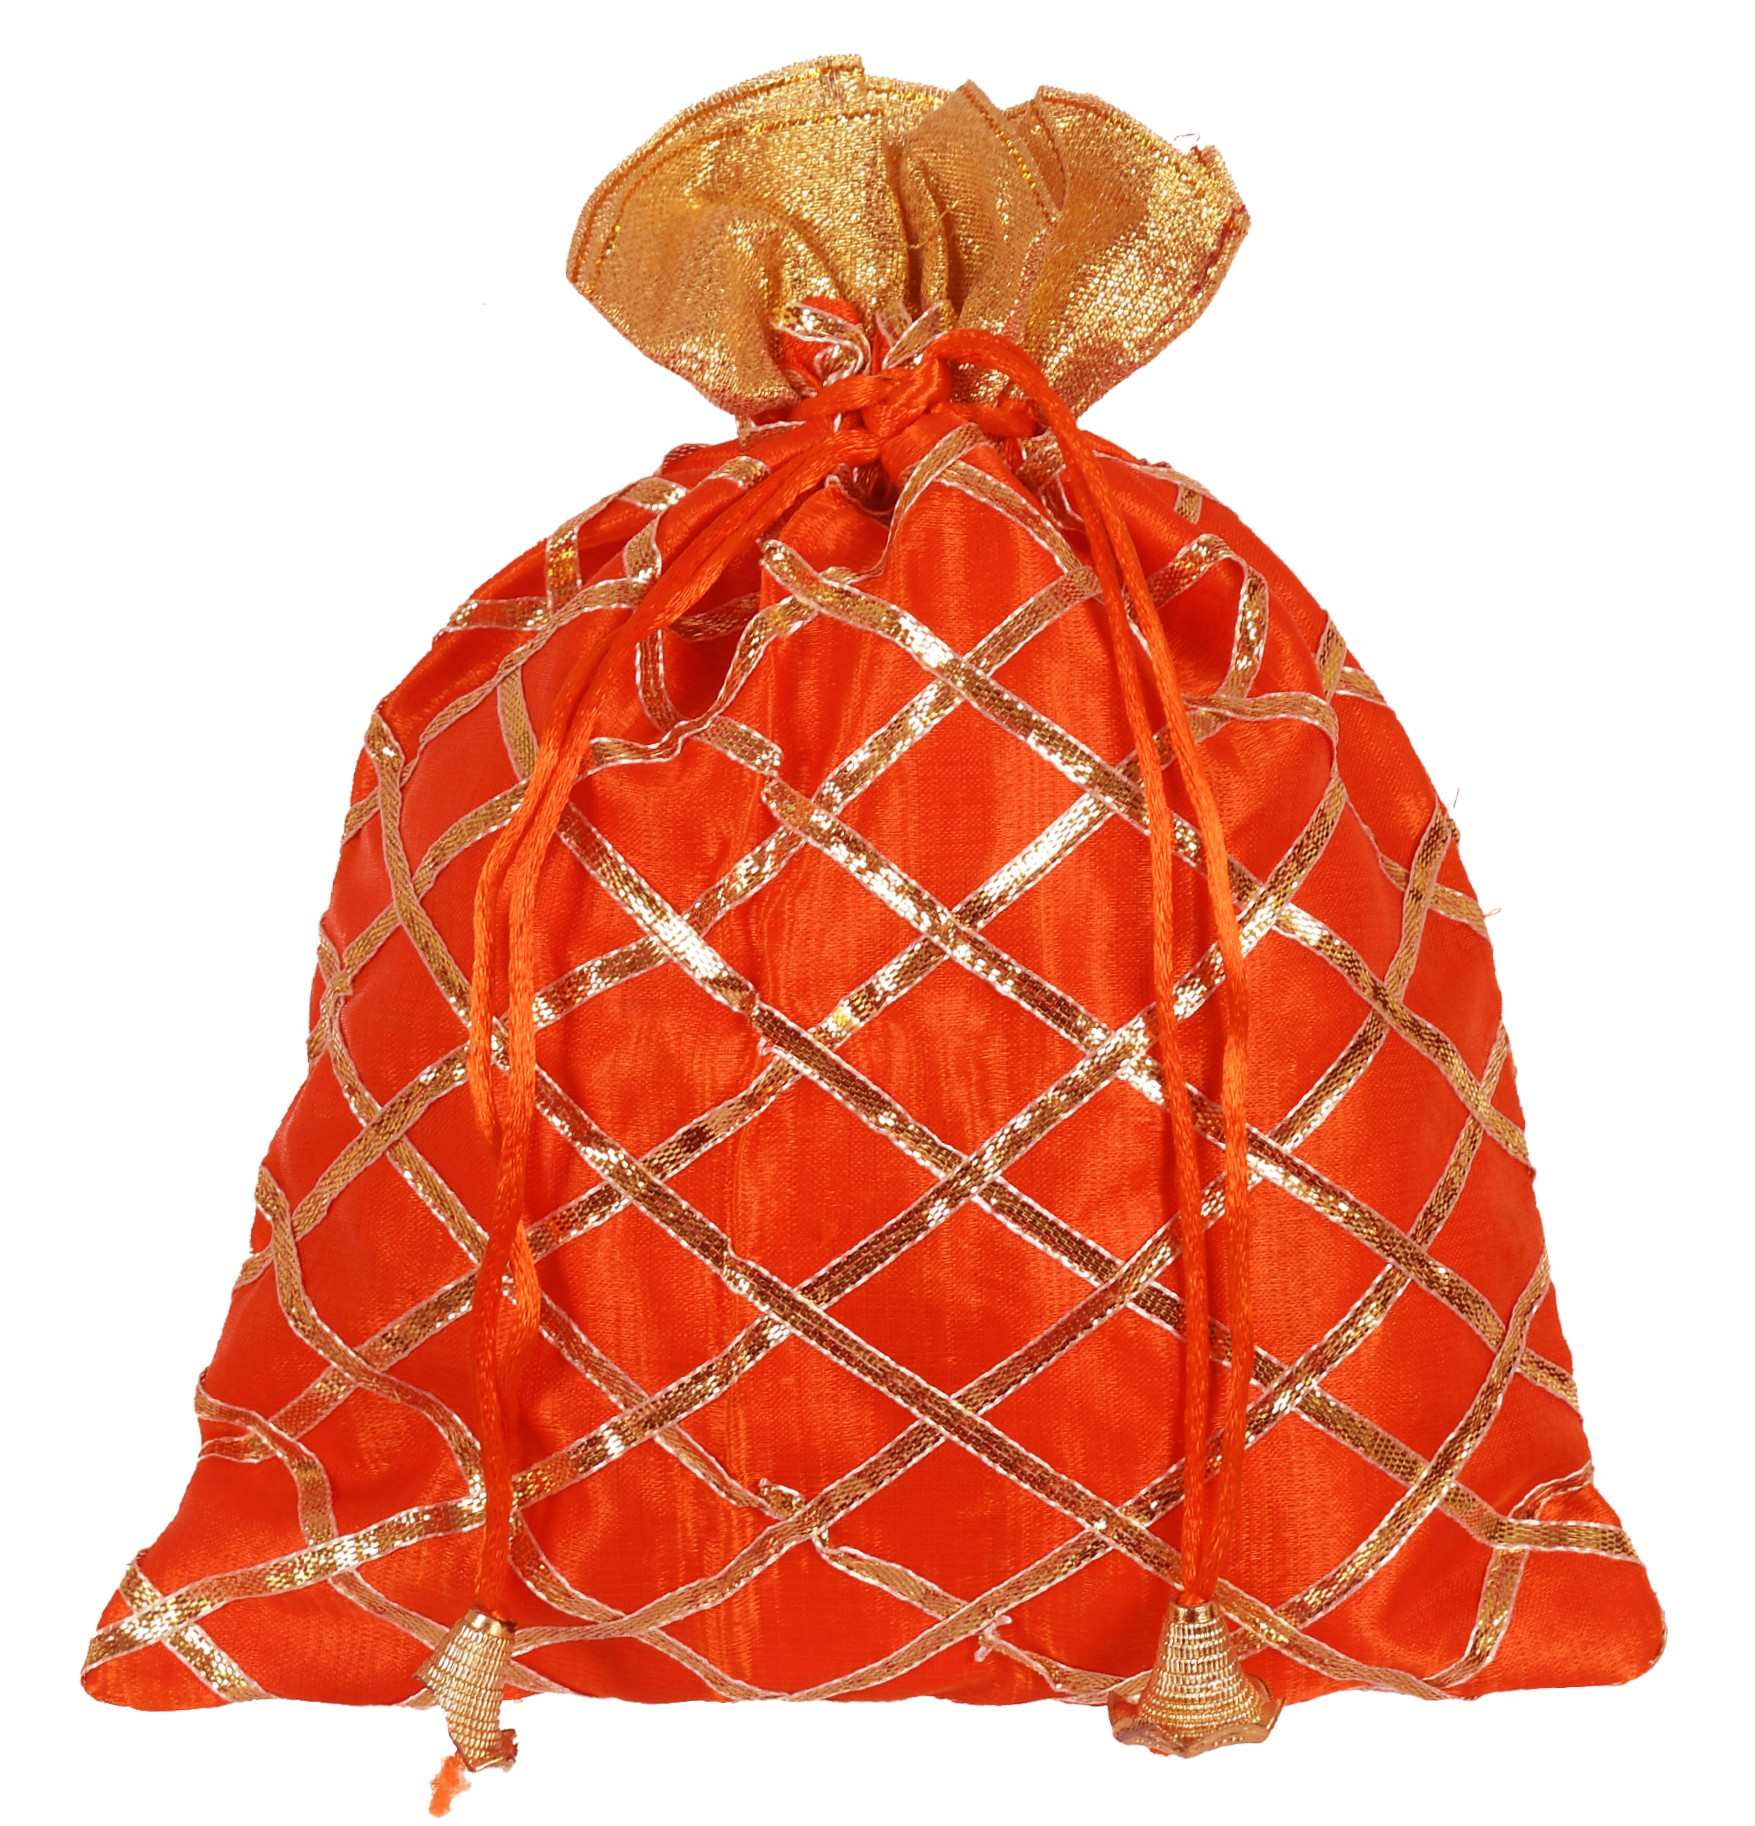 Kuber Industries Drawstring Potli Bag Party Wedding Favor Gift Jewelry Bags-Pack of 4 (Red & Orange & Pink & Yellow)